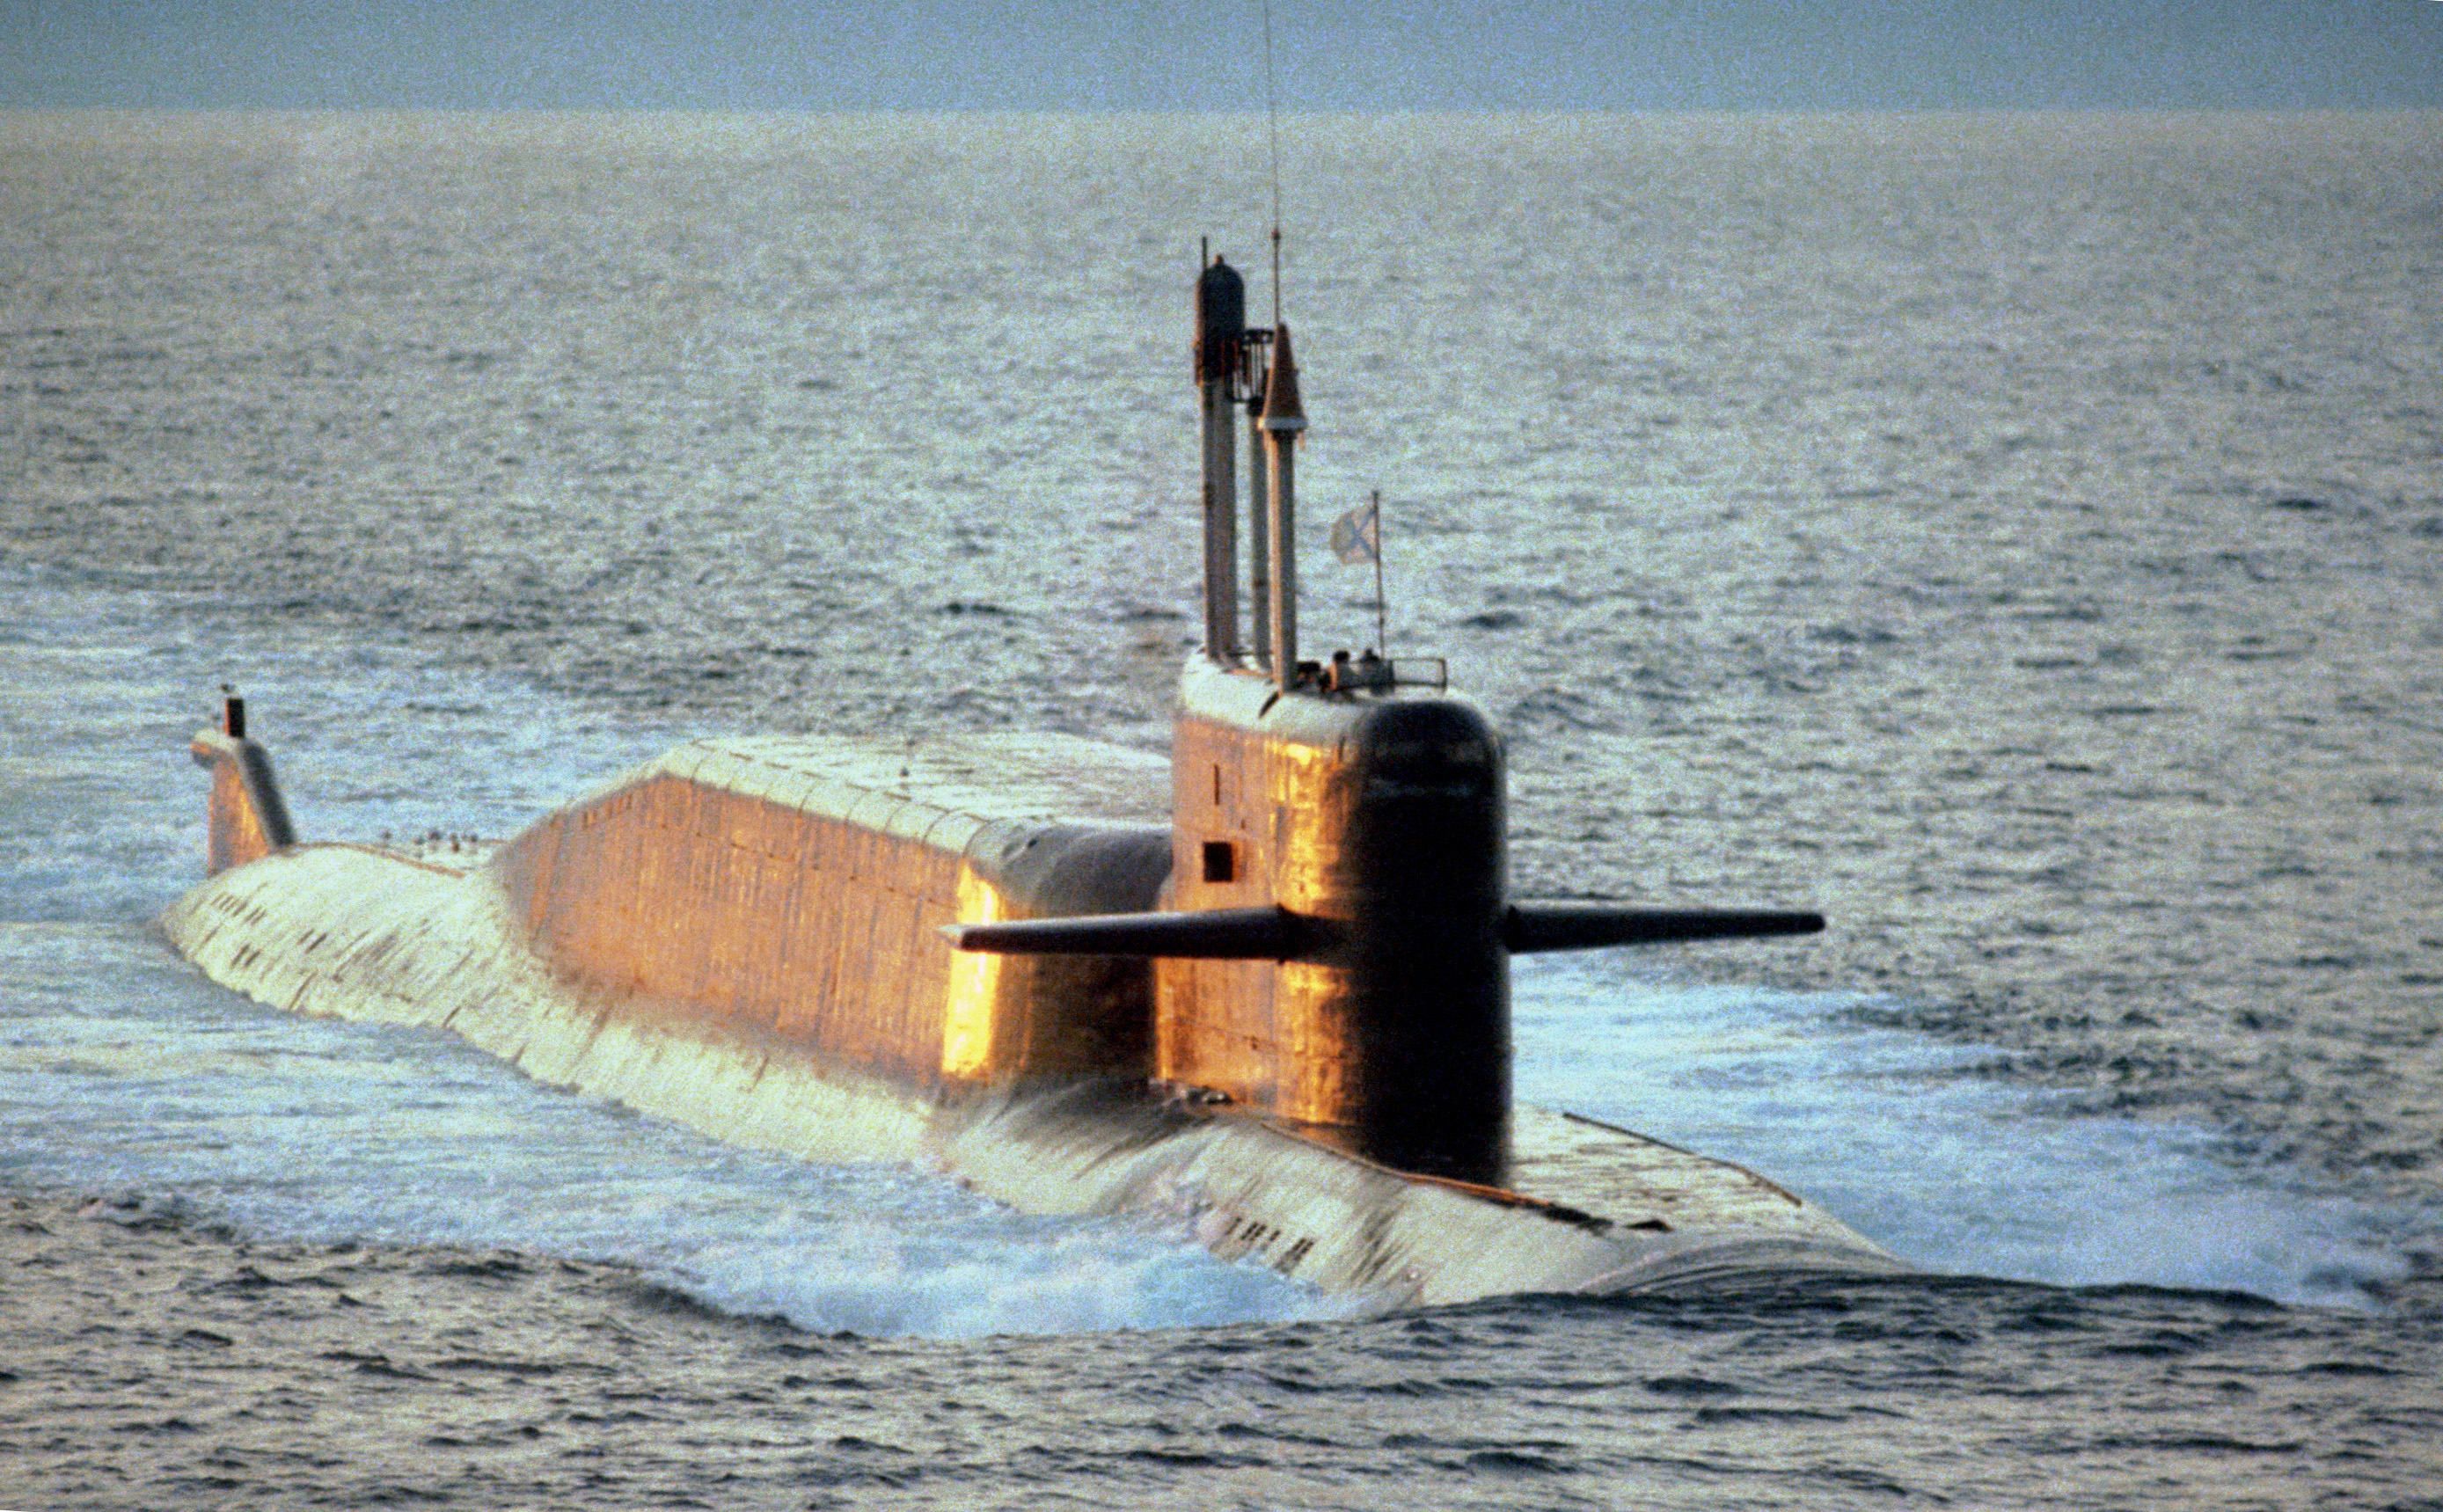 http://upload.wikimedia.org/wikipedia/commons/8/83/Submarine_Delta_IV_class.jpg